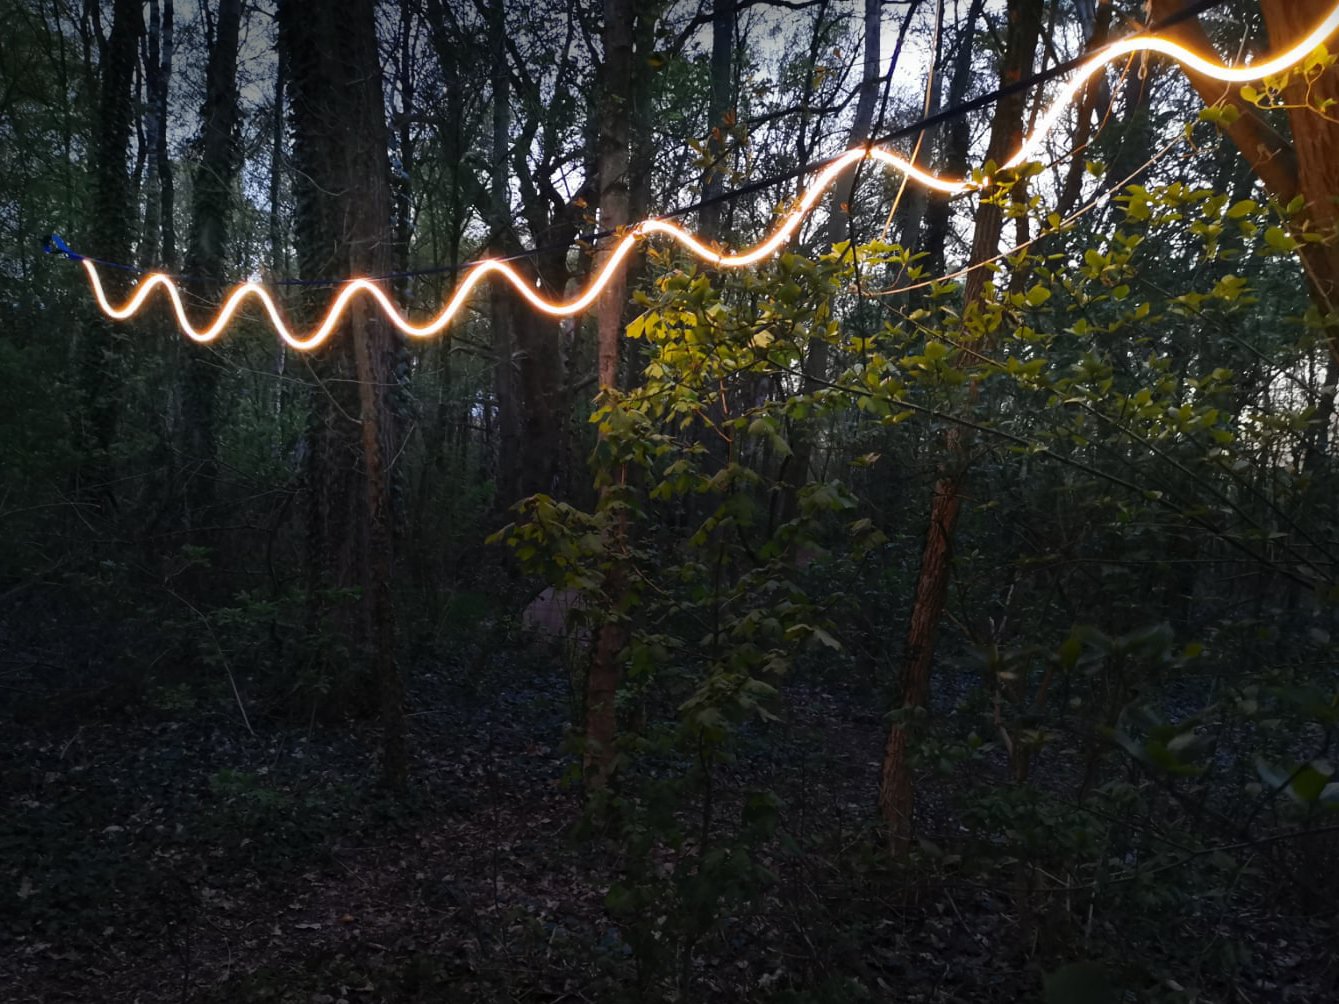 Sine Light OD in forest - [ARRAY] by David Derksen.jpg